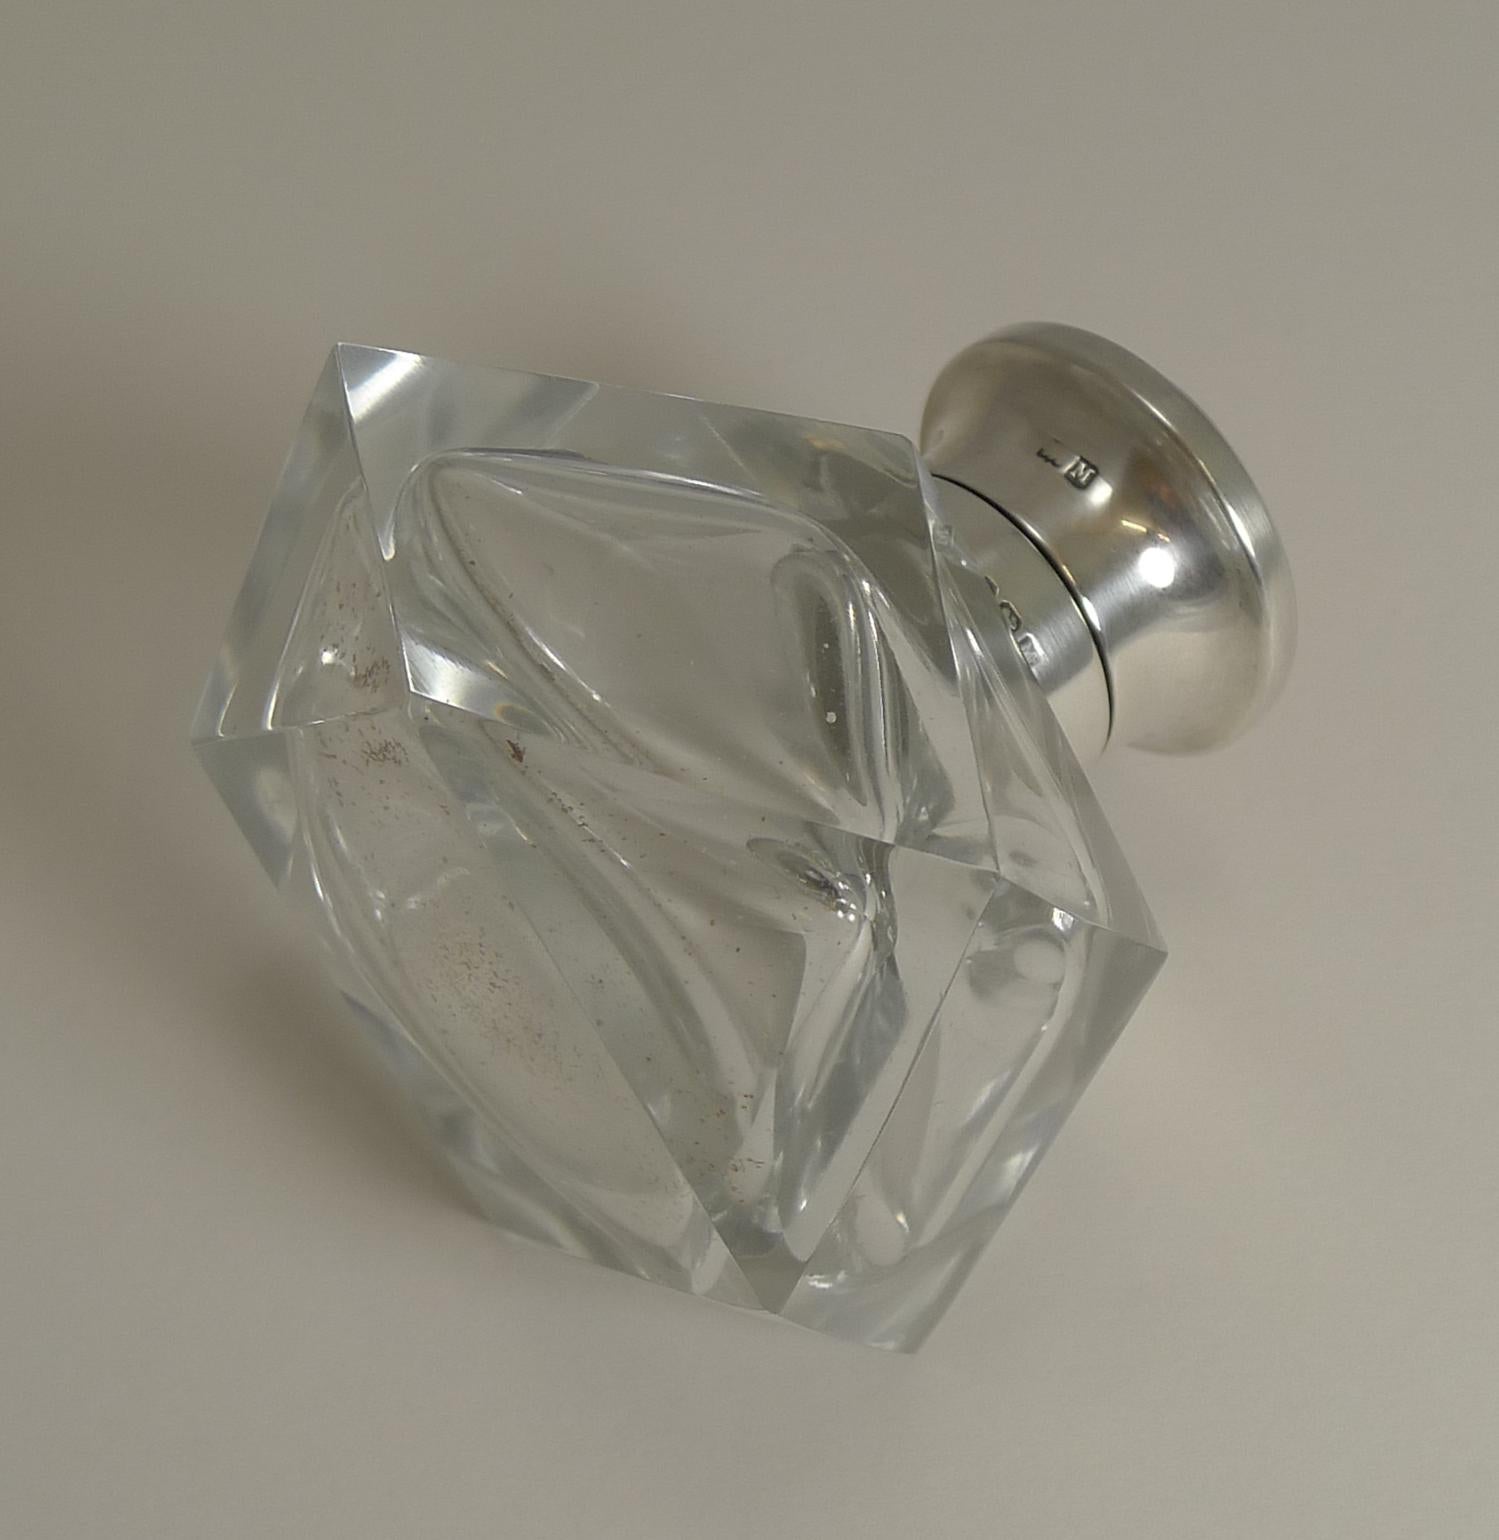 wells sterling perfume bottle